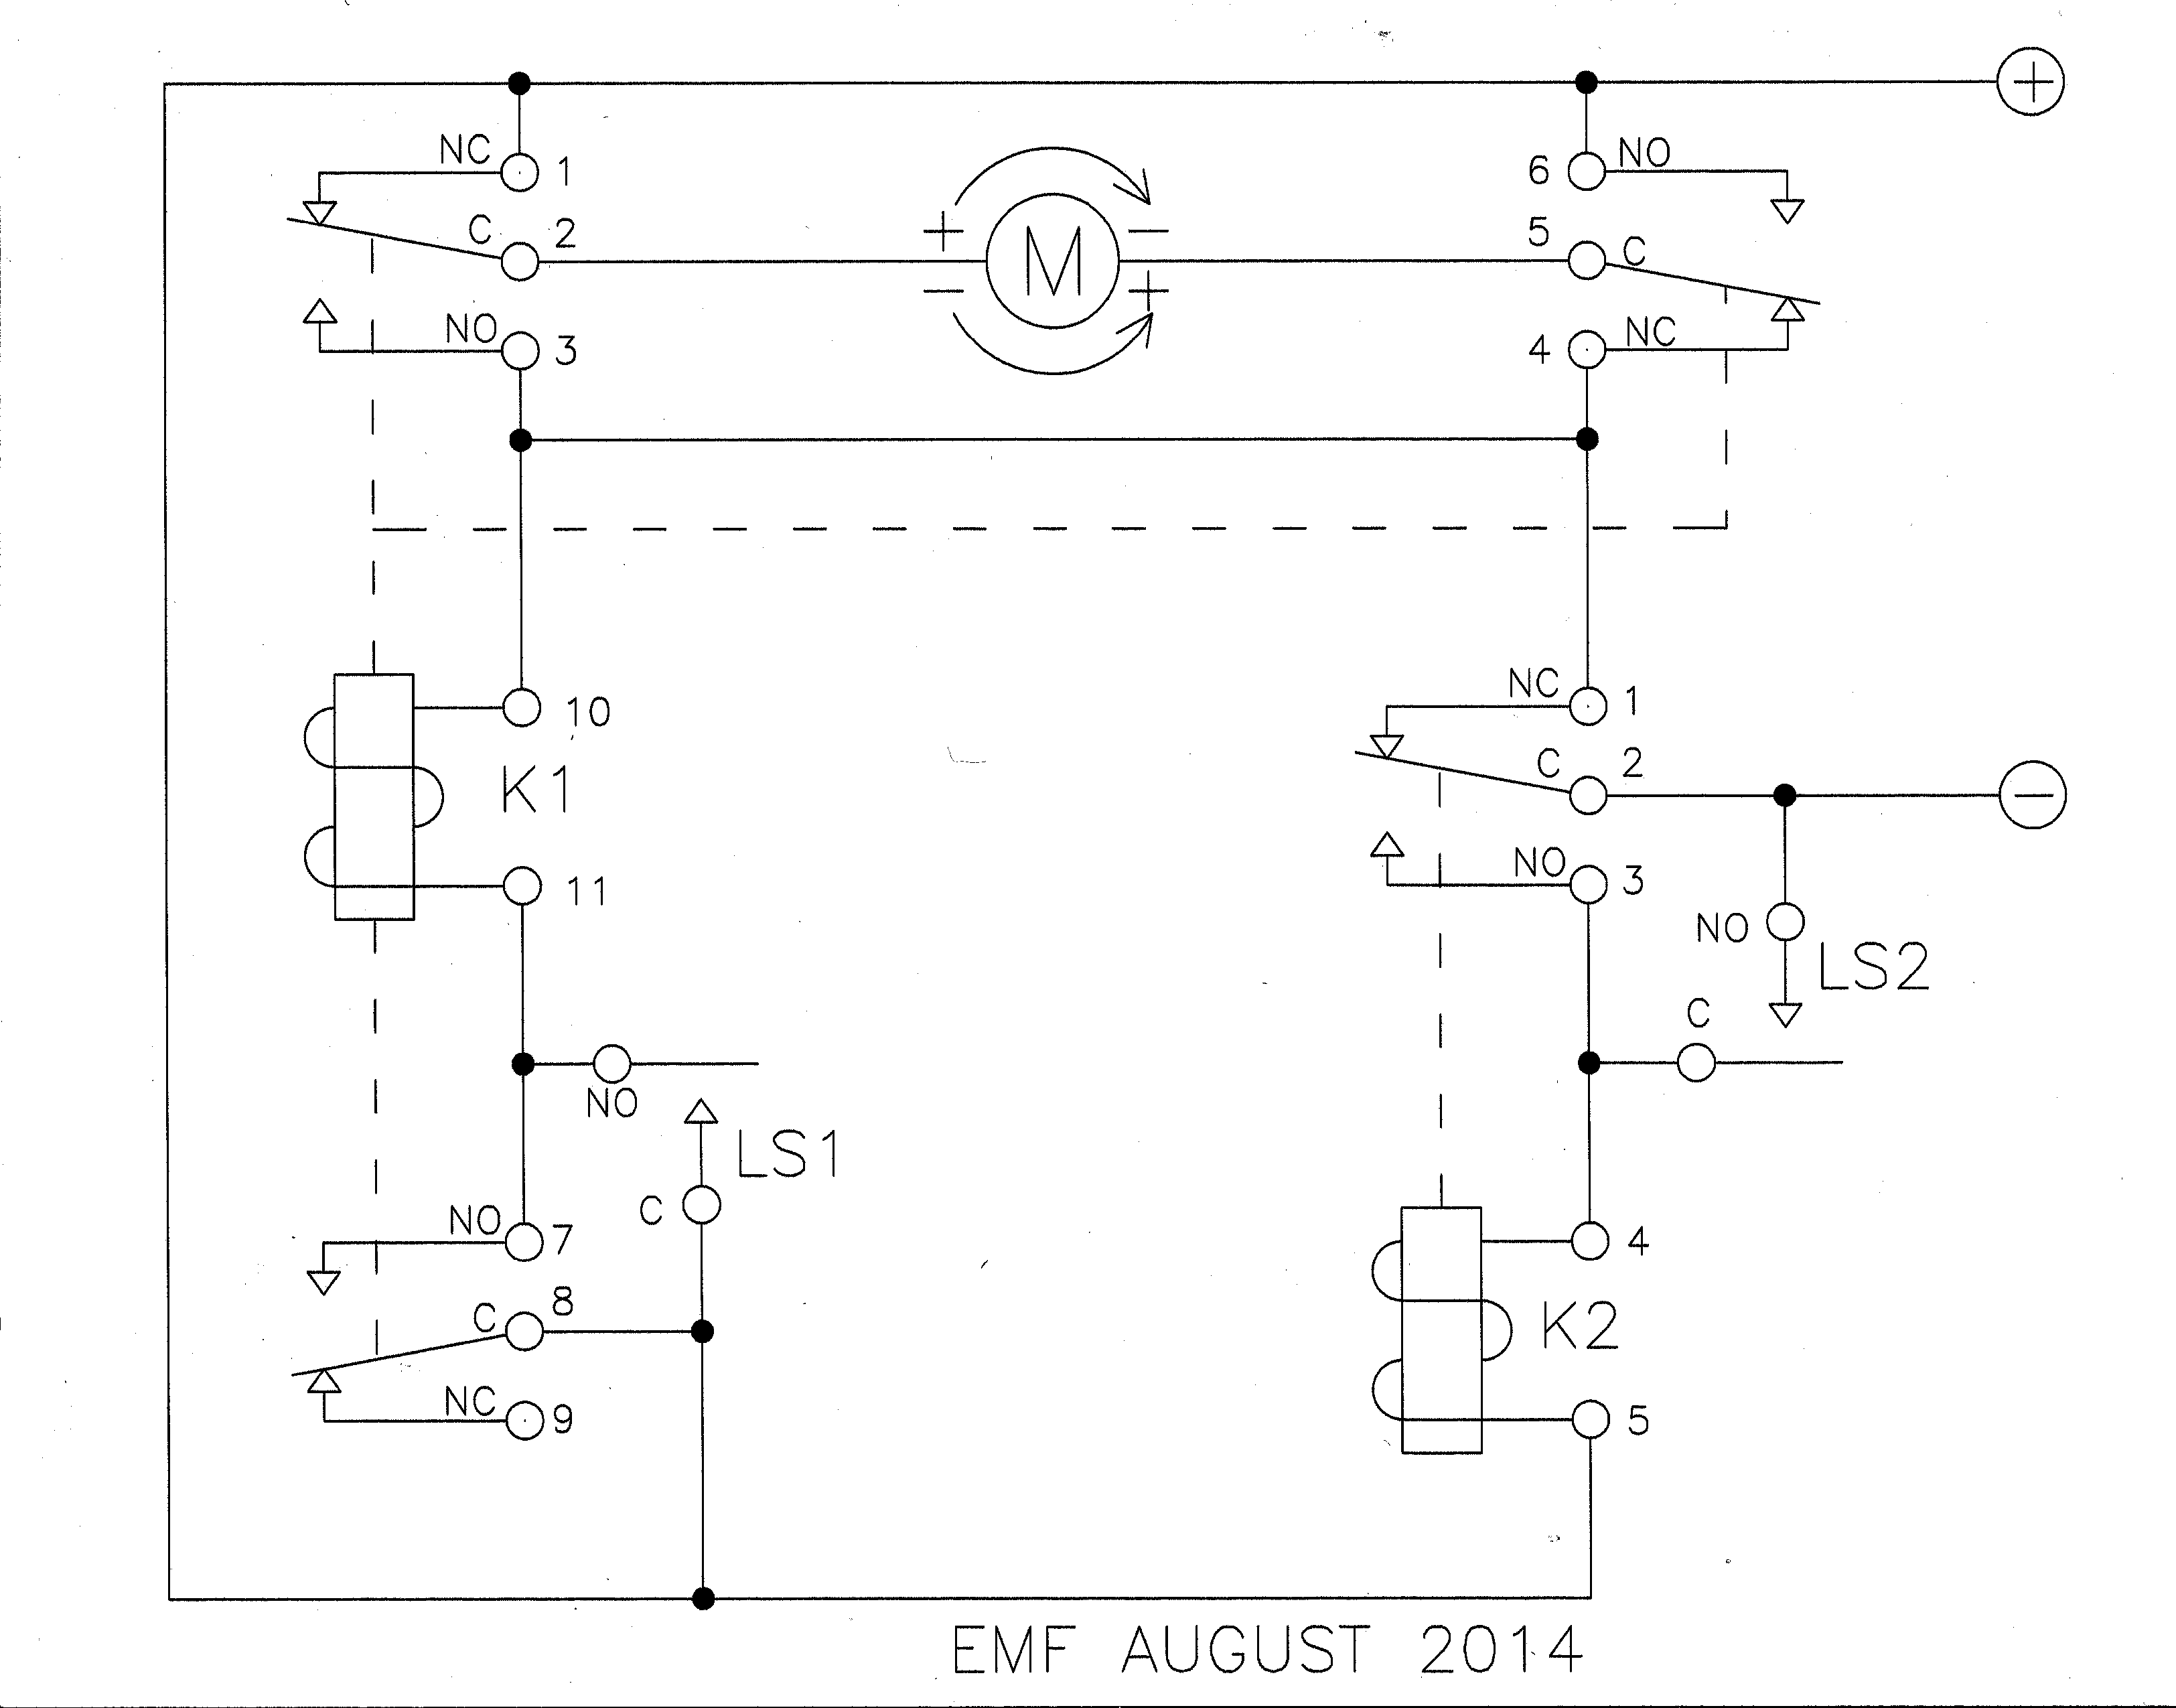 dmx wiring diagram does polarity matter?